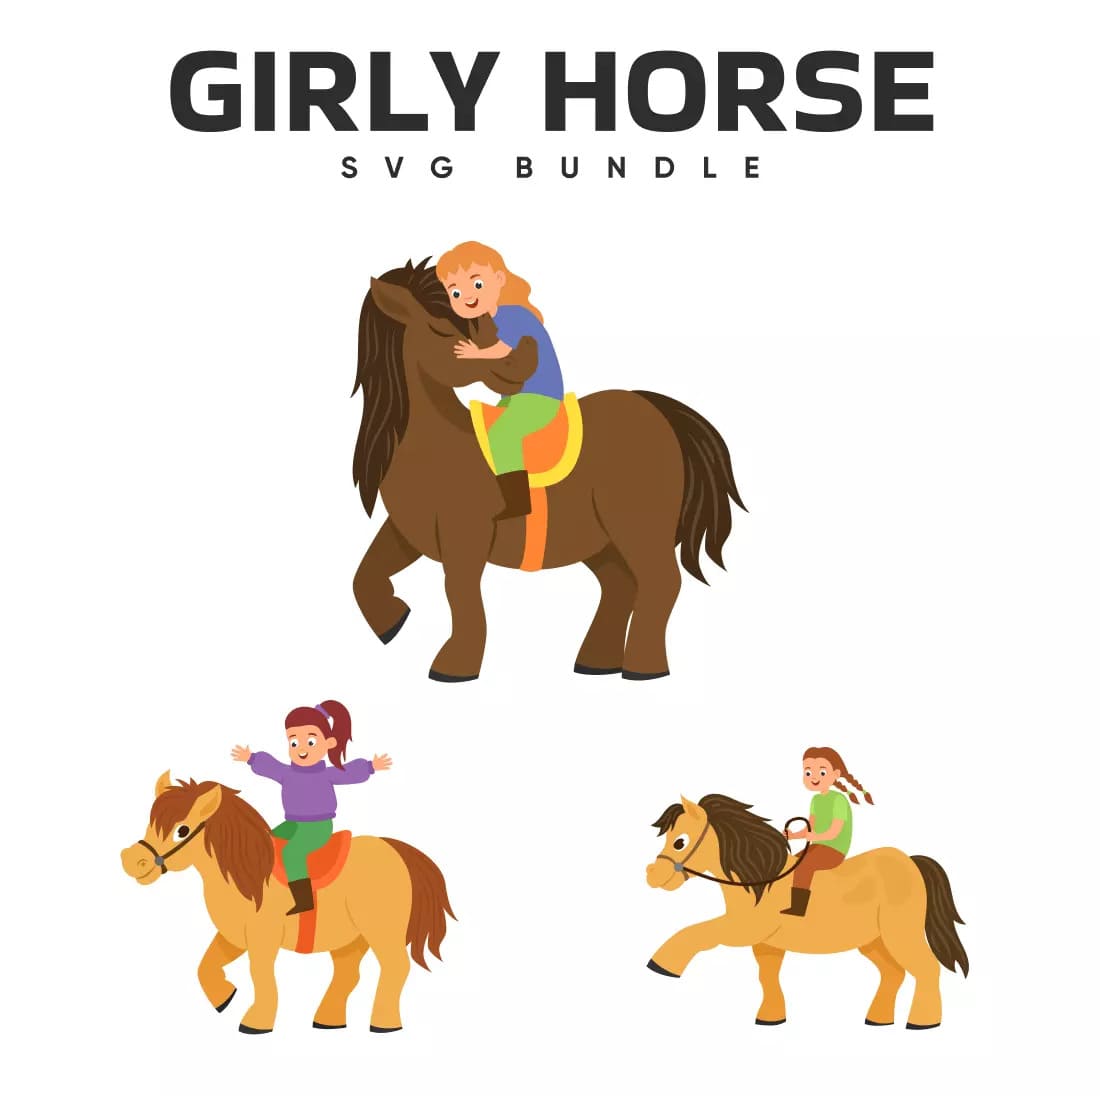 The girl horse svg bundle includes a girl riding a horse.